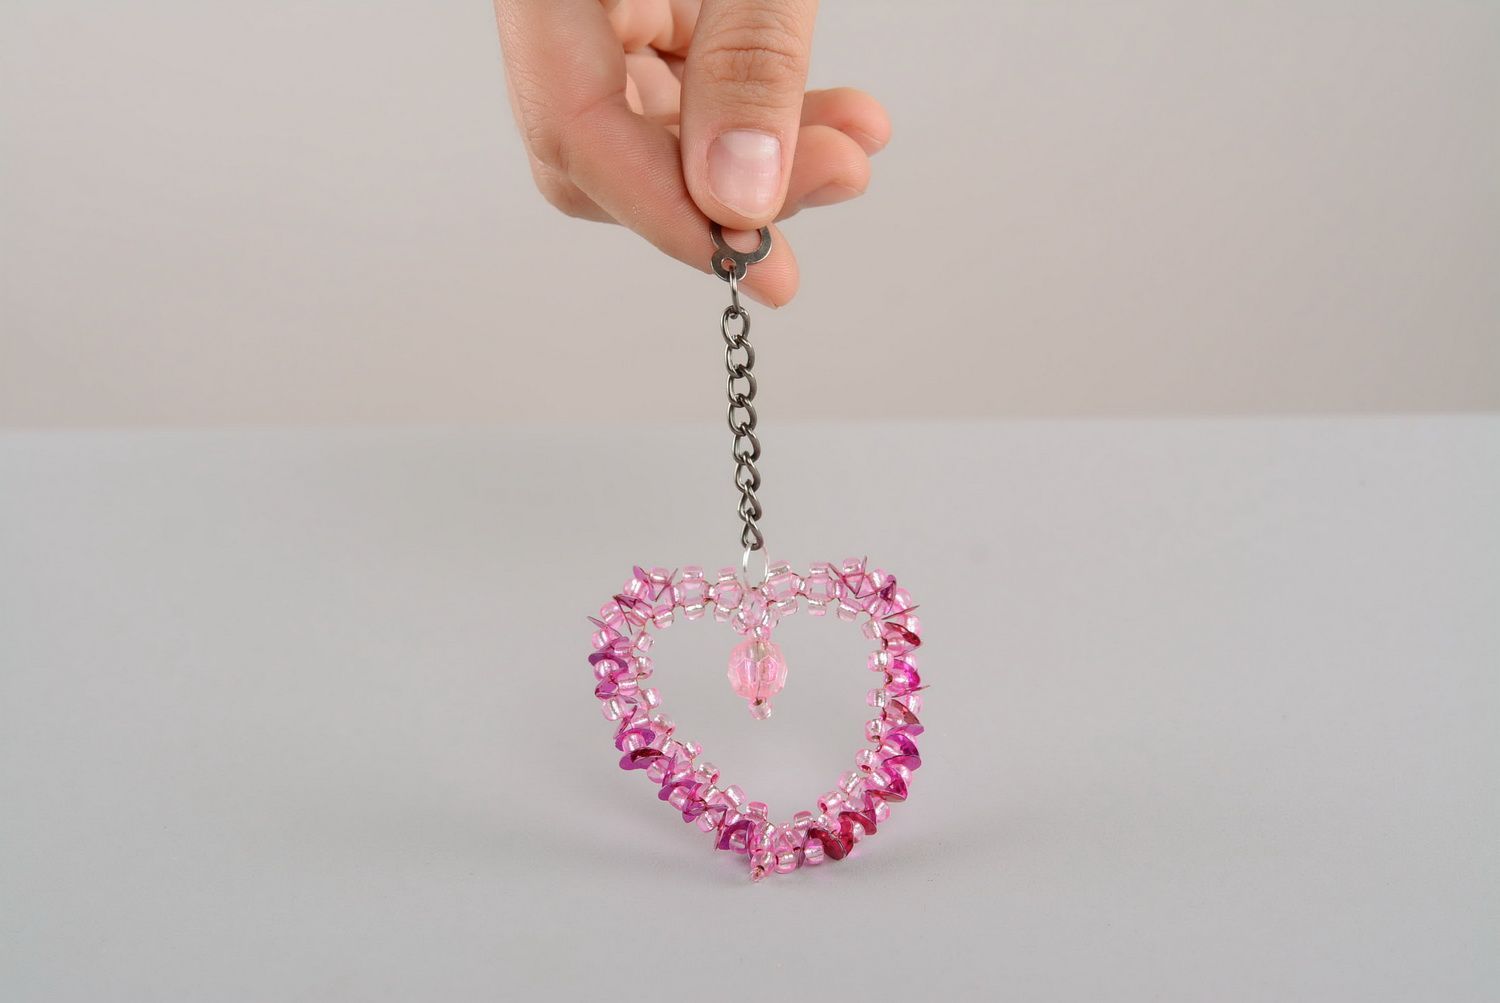 Keychain made of beads photo 3